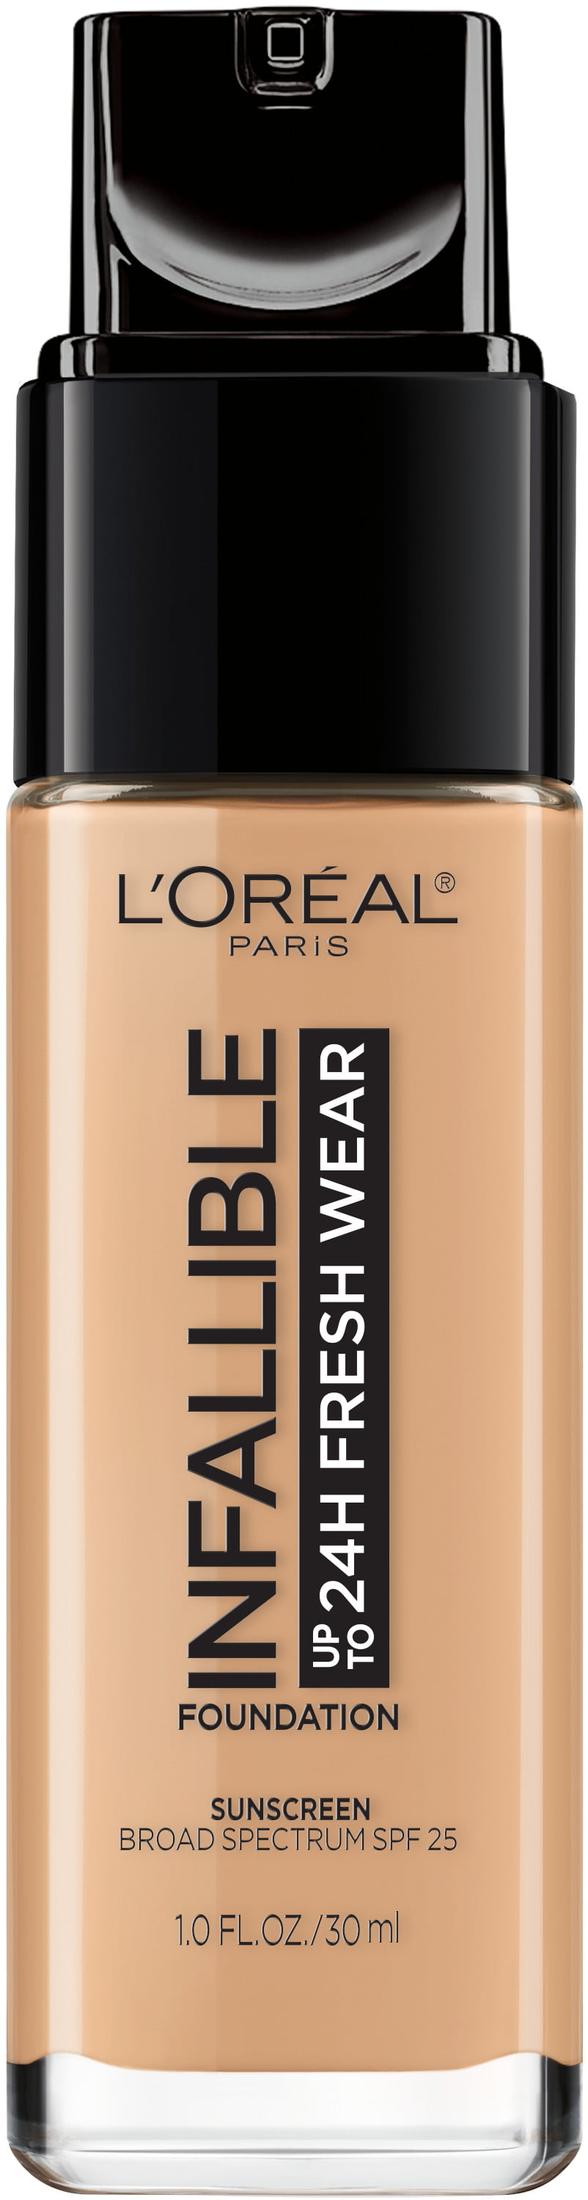 L'Oreal Paris Infallible Fresh Wear 24 Hr Liquid Foundation Makeup, 455 Natural Buff, 1 fl oz - image 3 of 12